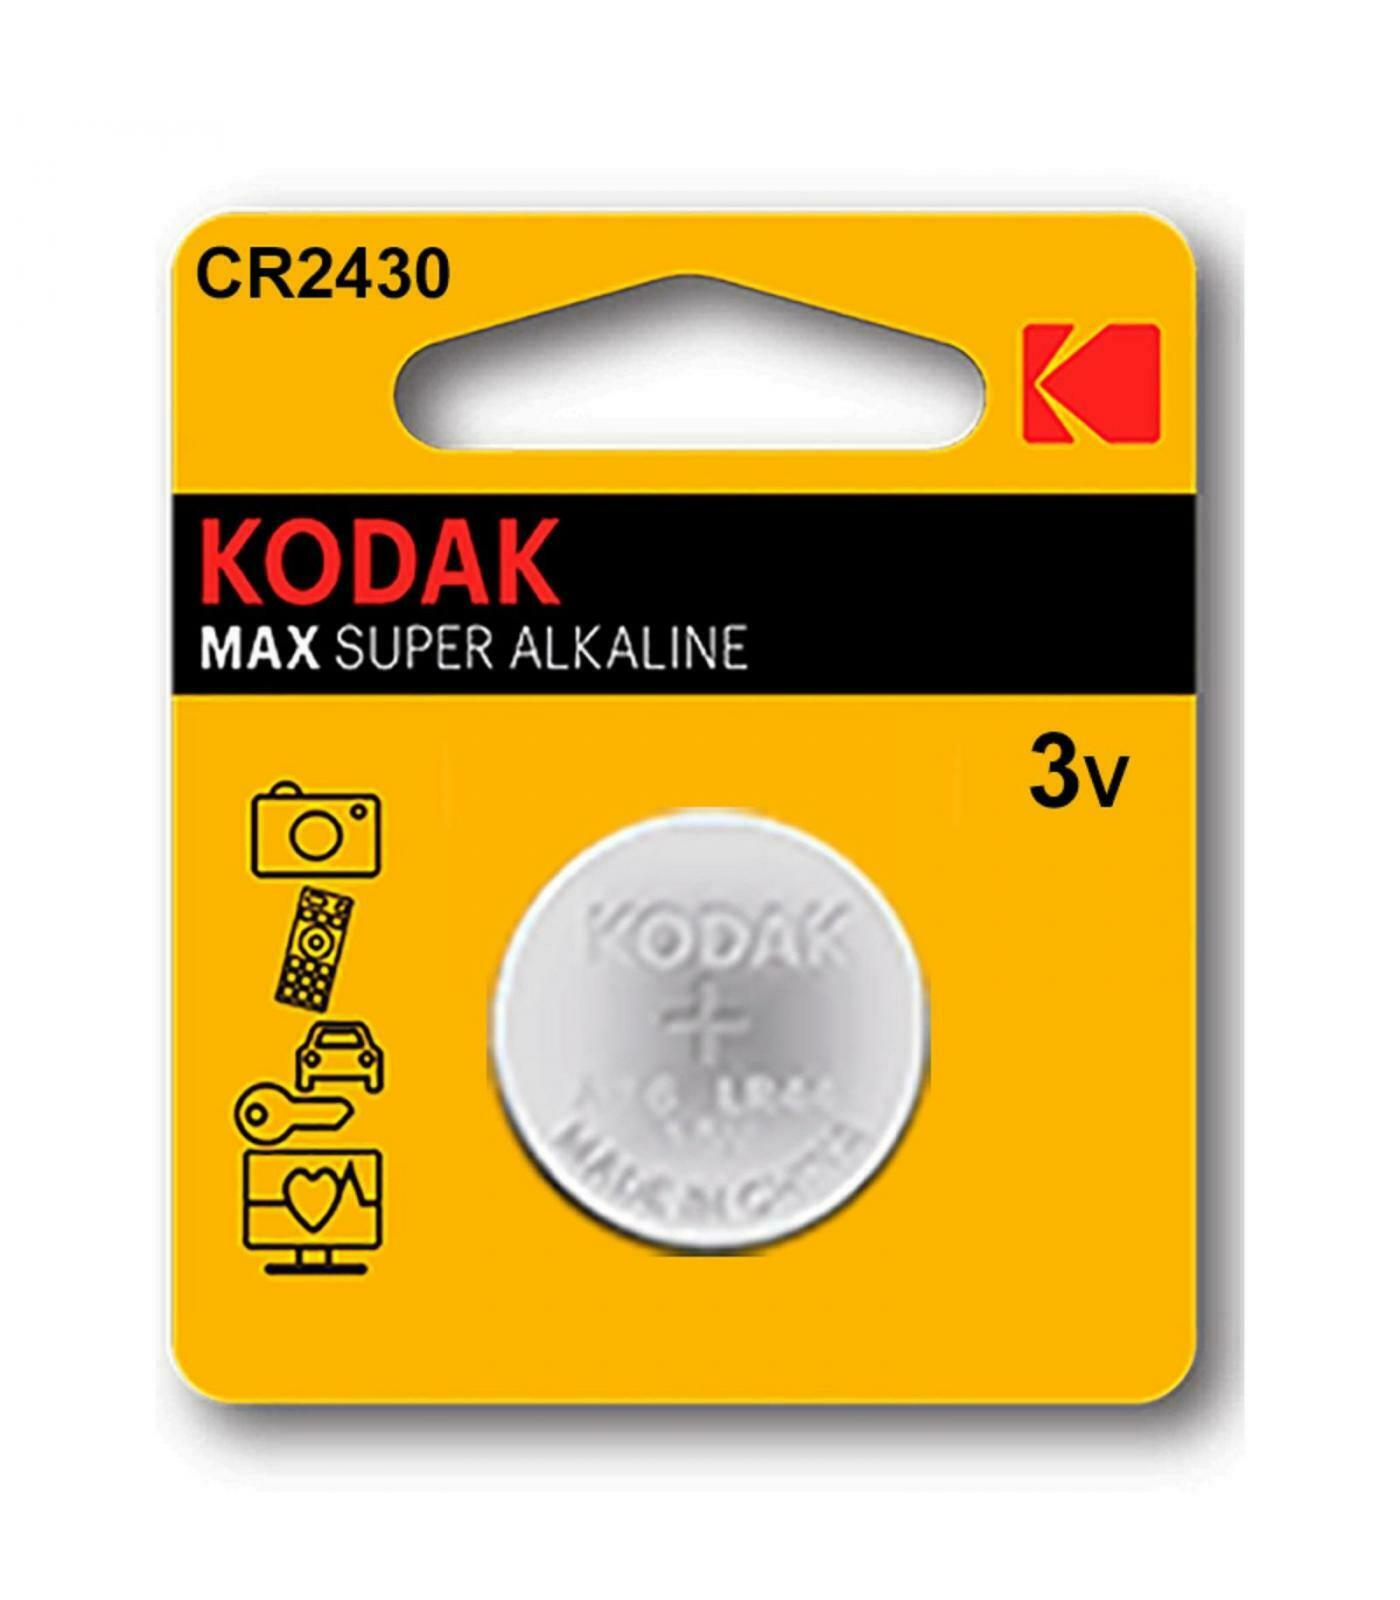 CR2430 Kodak - Taracido Cocina y Hogar